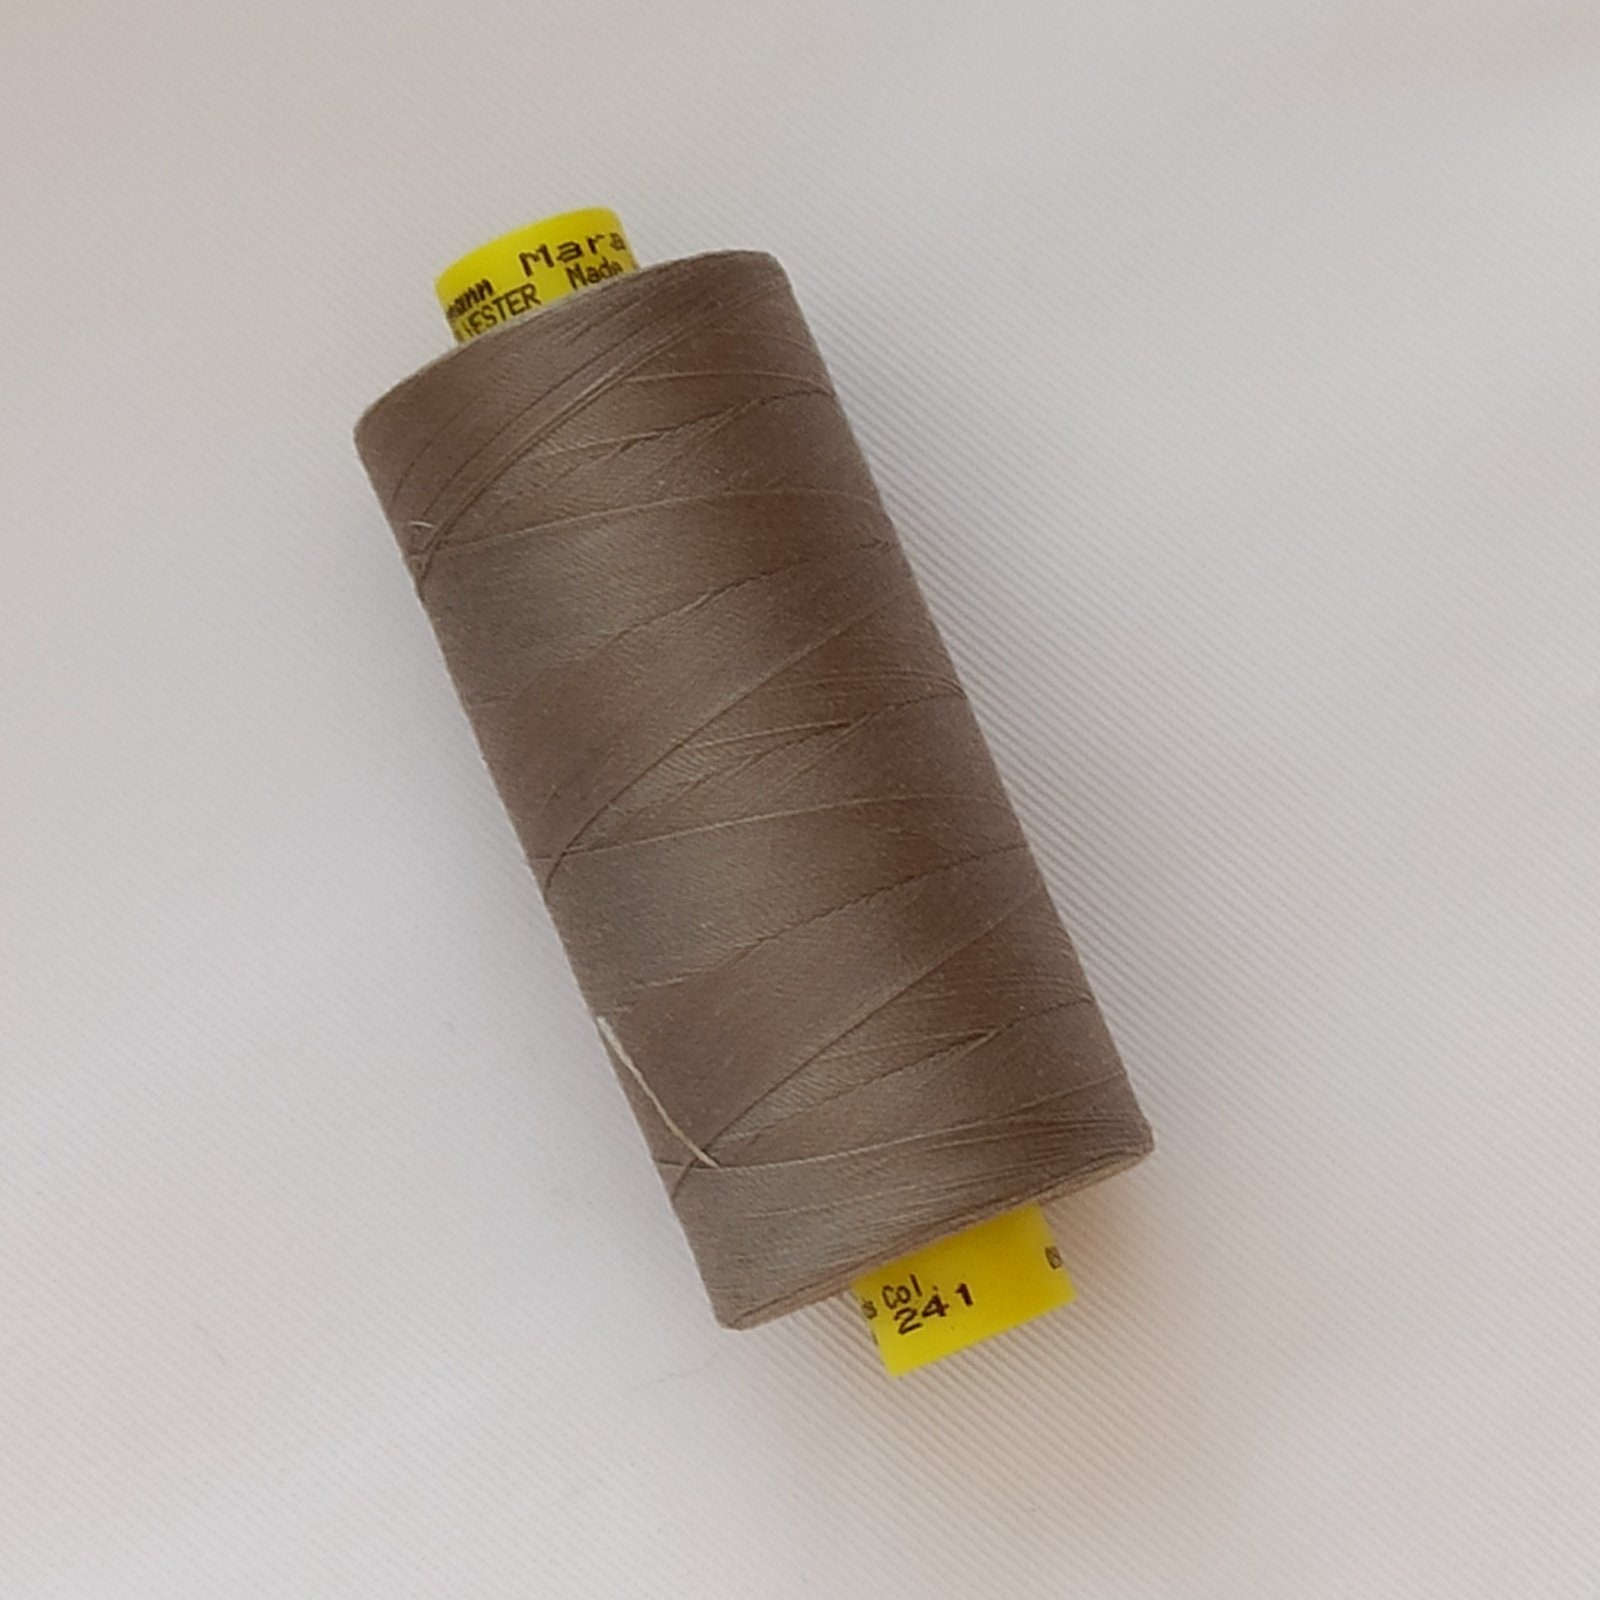 Glide Thread - Small Spool in Husky 17530